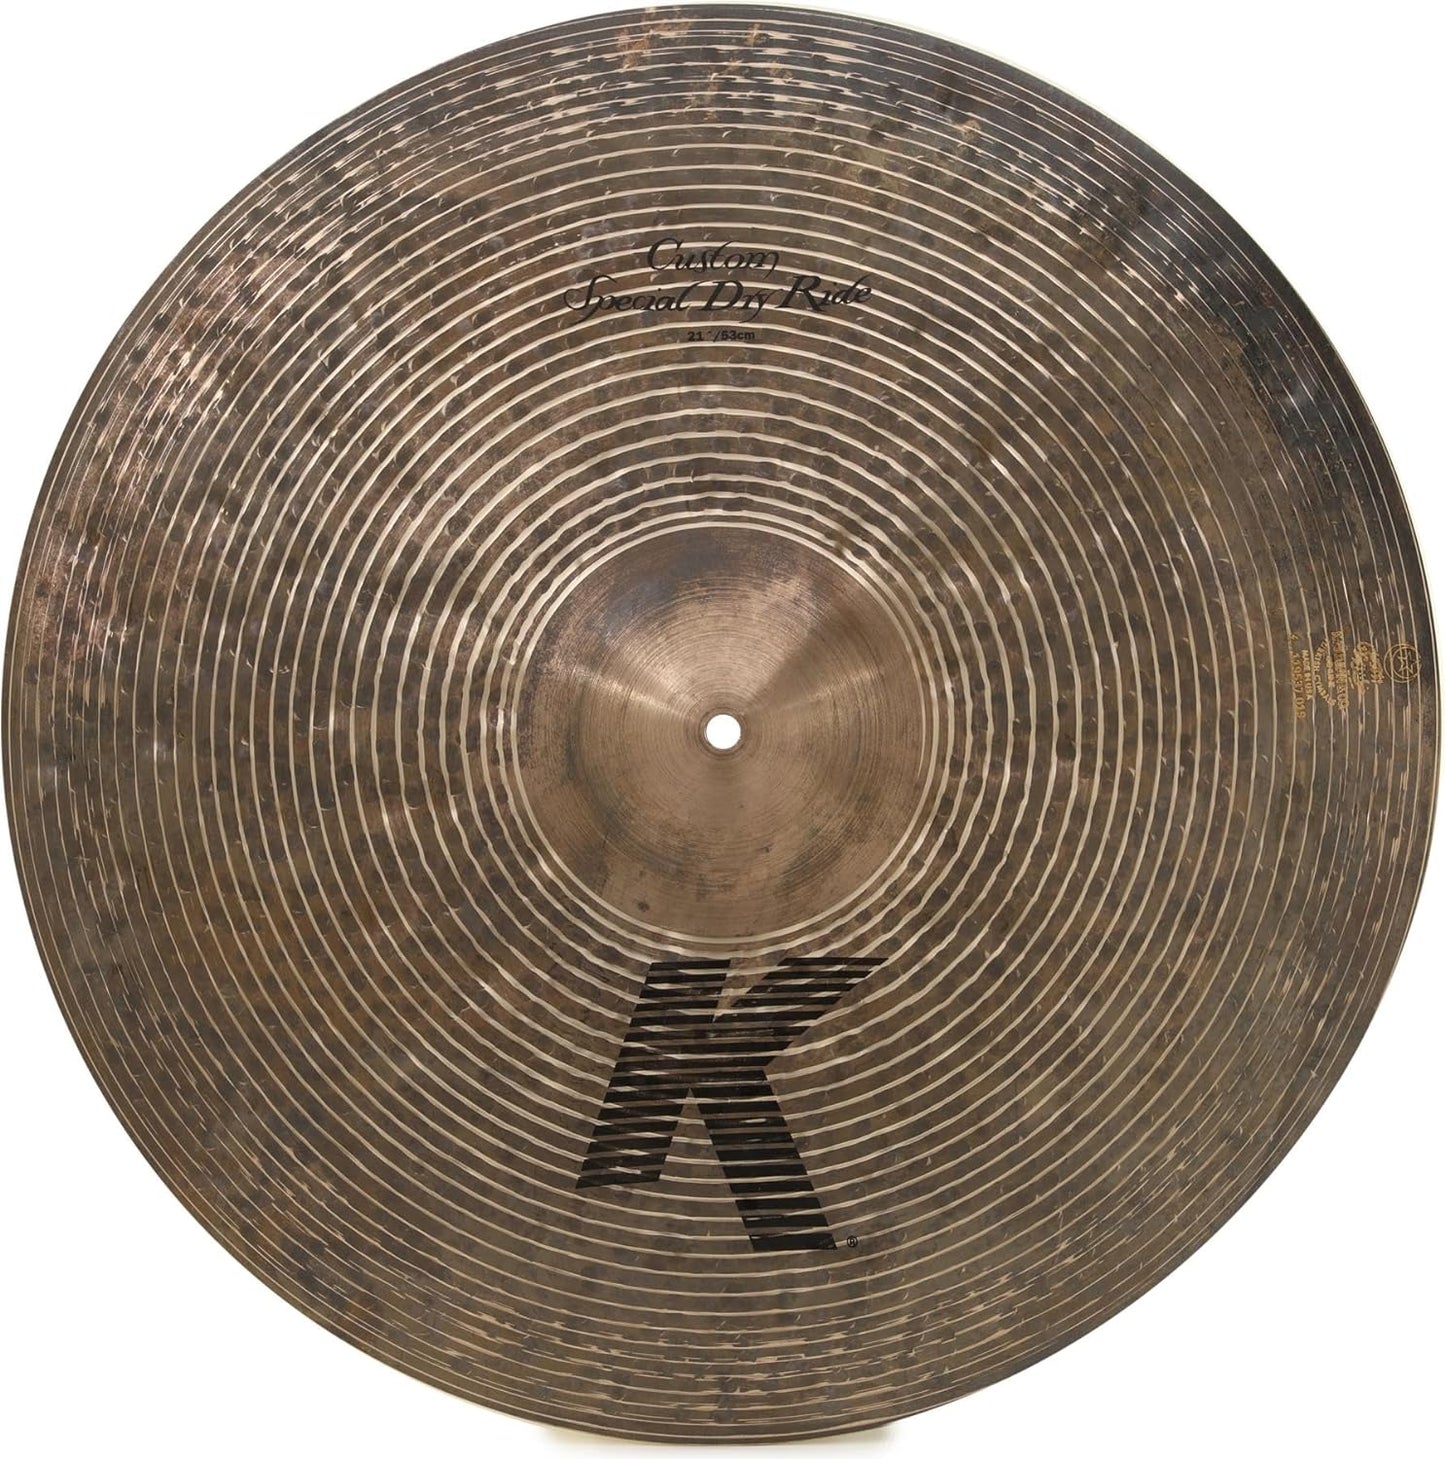 Zildjian K Custom Special Dry 21 Inch Ride Cymbal K1426